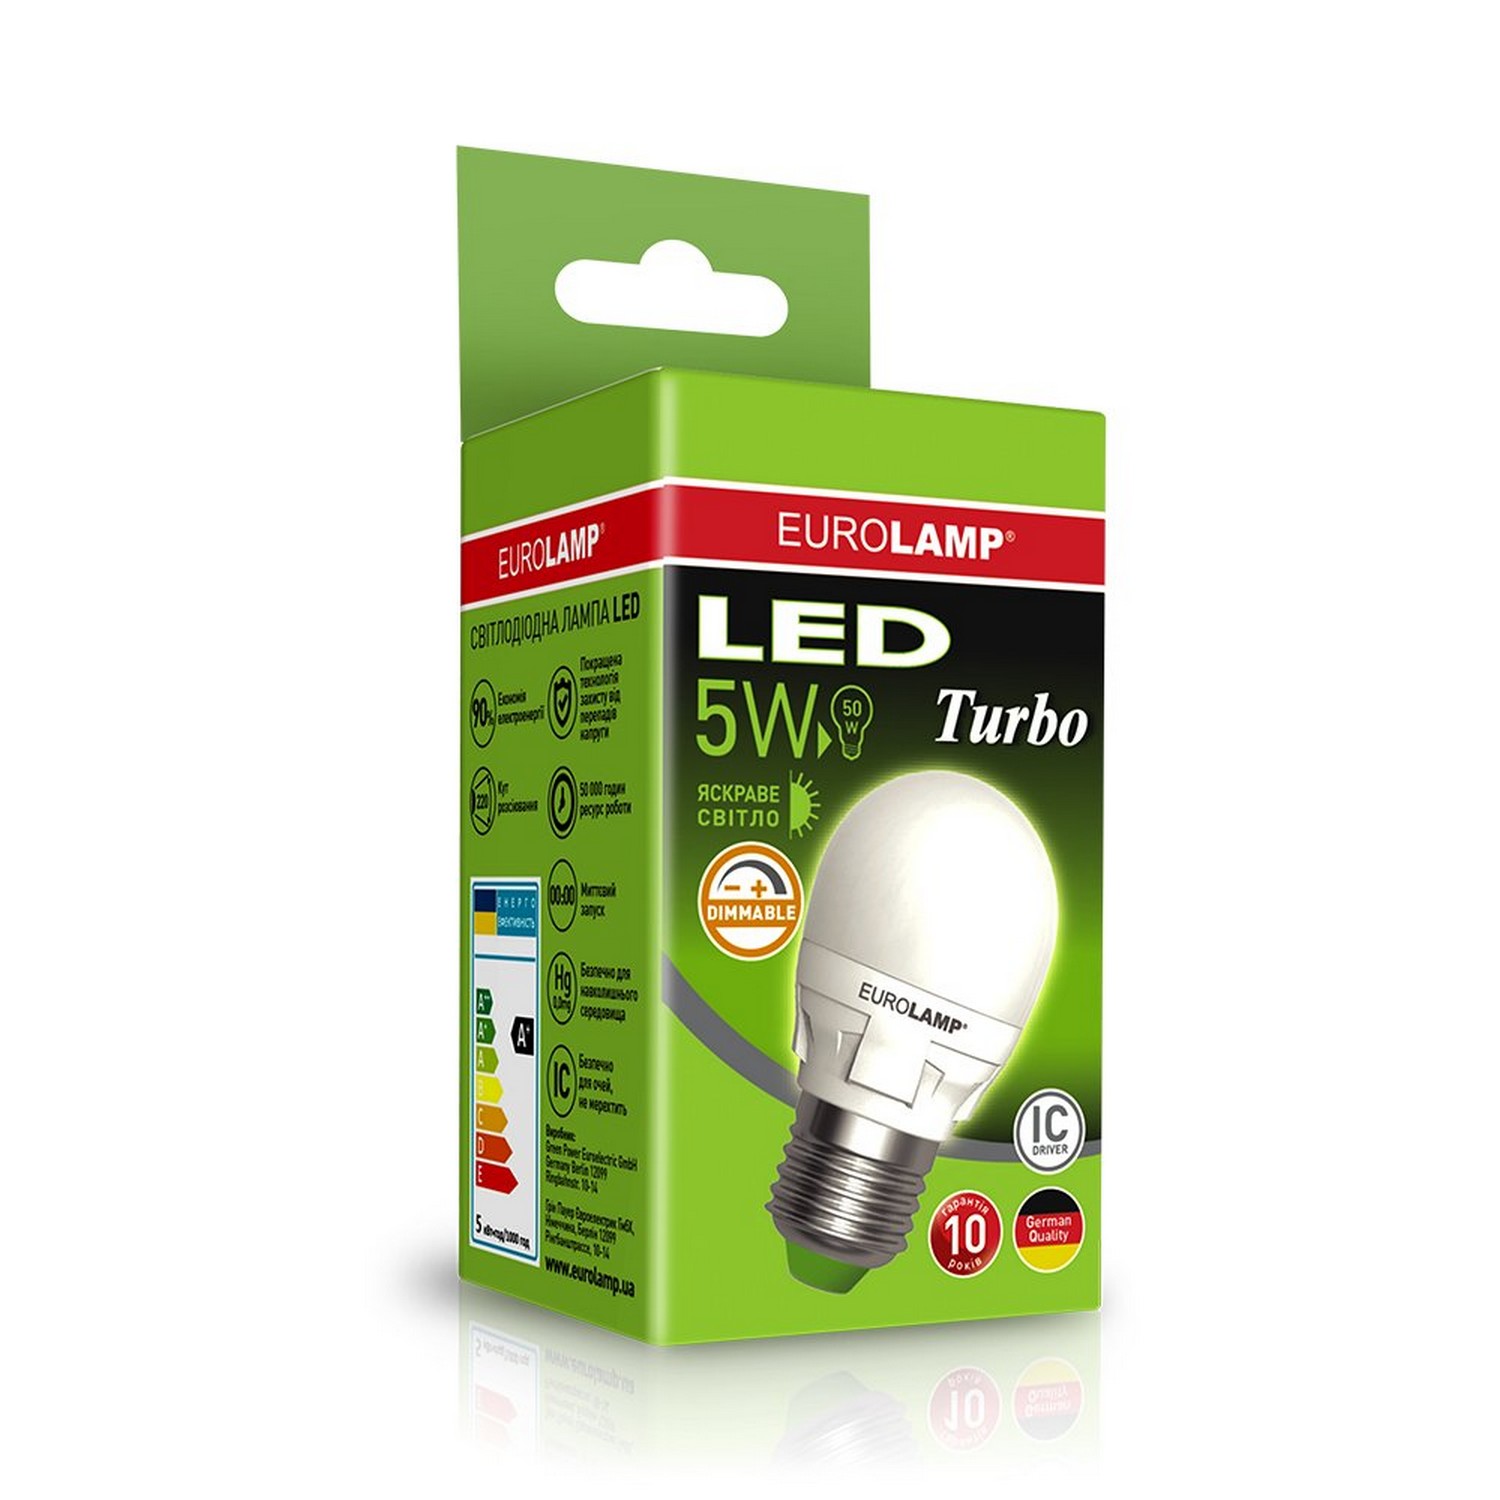 Лампа Eurolamp LED TURBO NEW dimmable G45 5W E27 4000K цена 0.00 грн - фотография 2